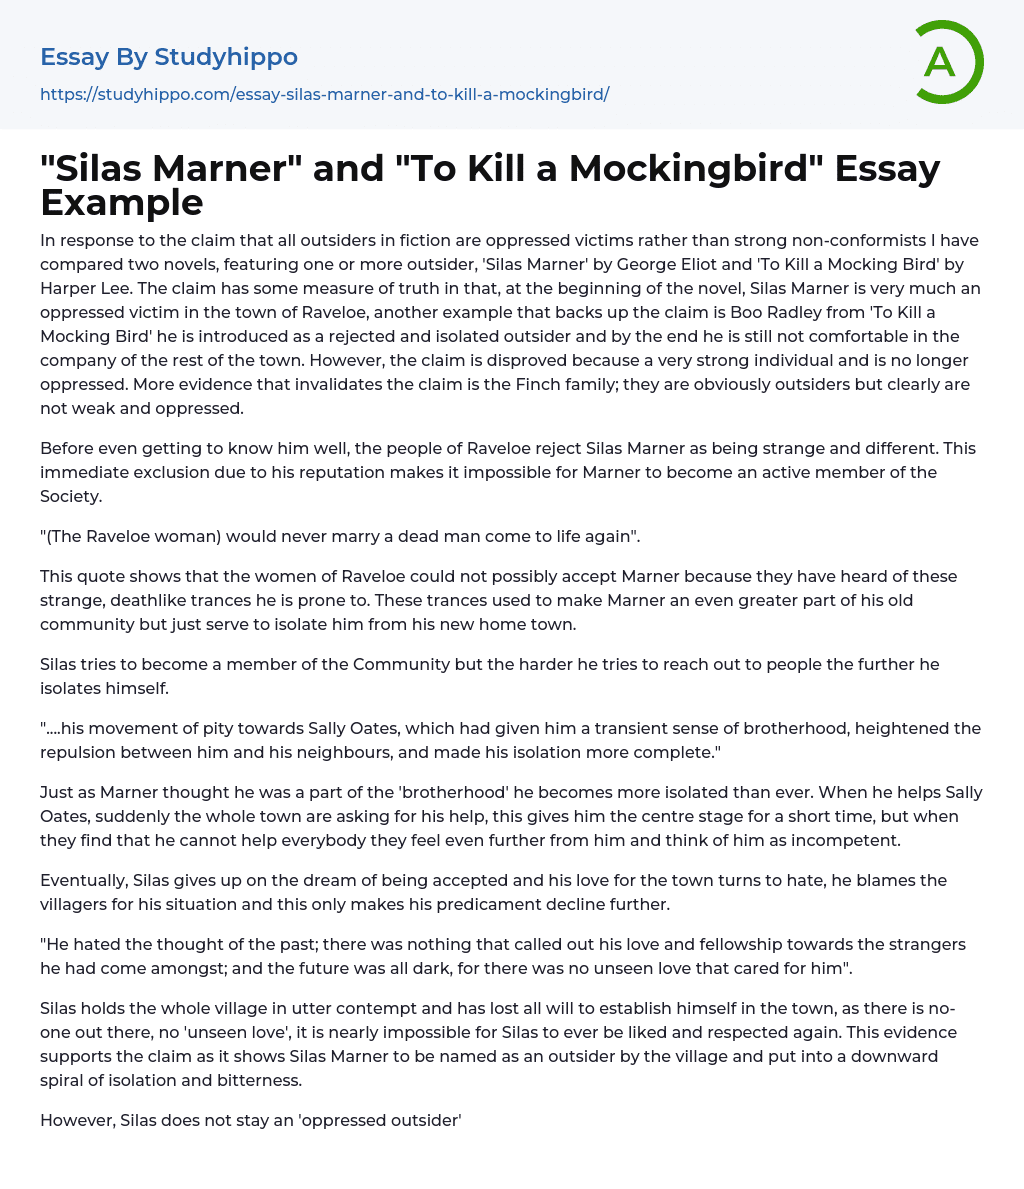 “Silas Marner” and “To Kill a Mockingbird” Essay Example